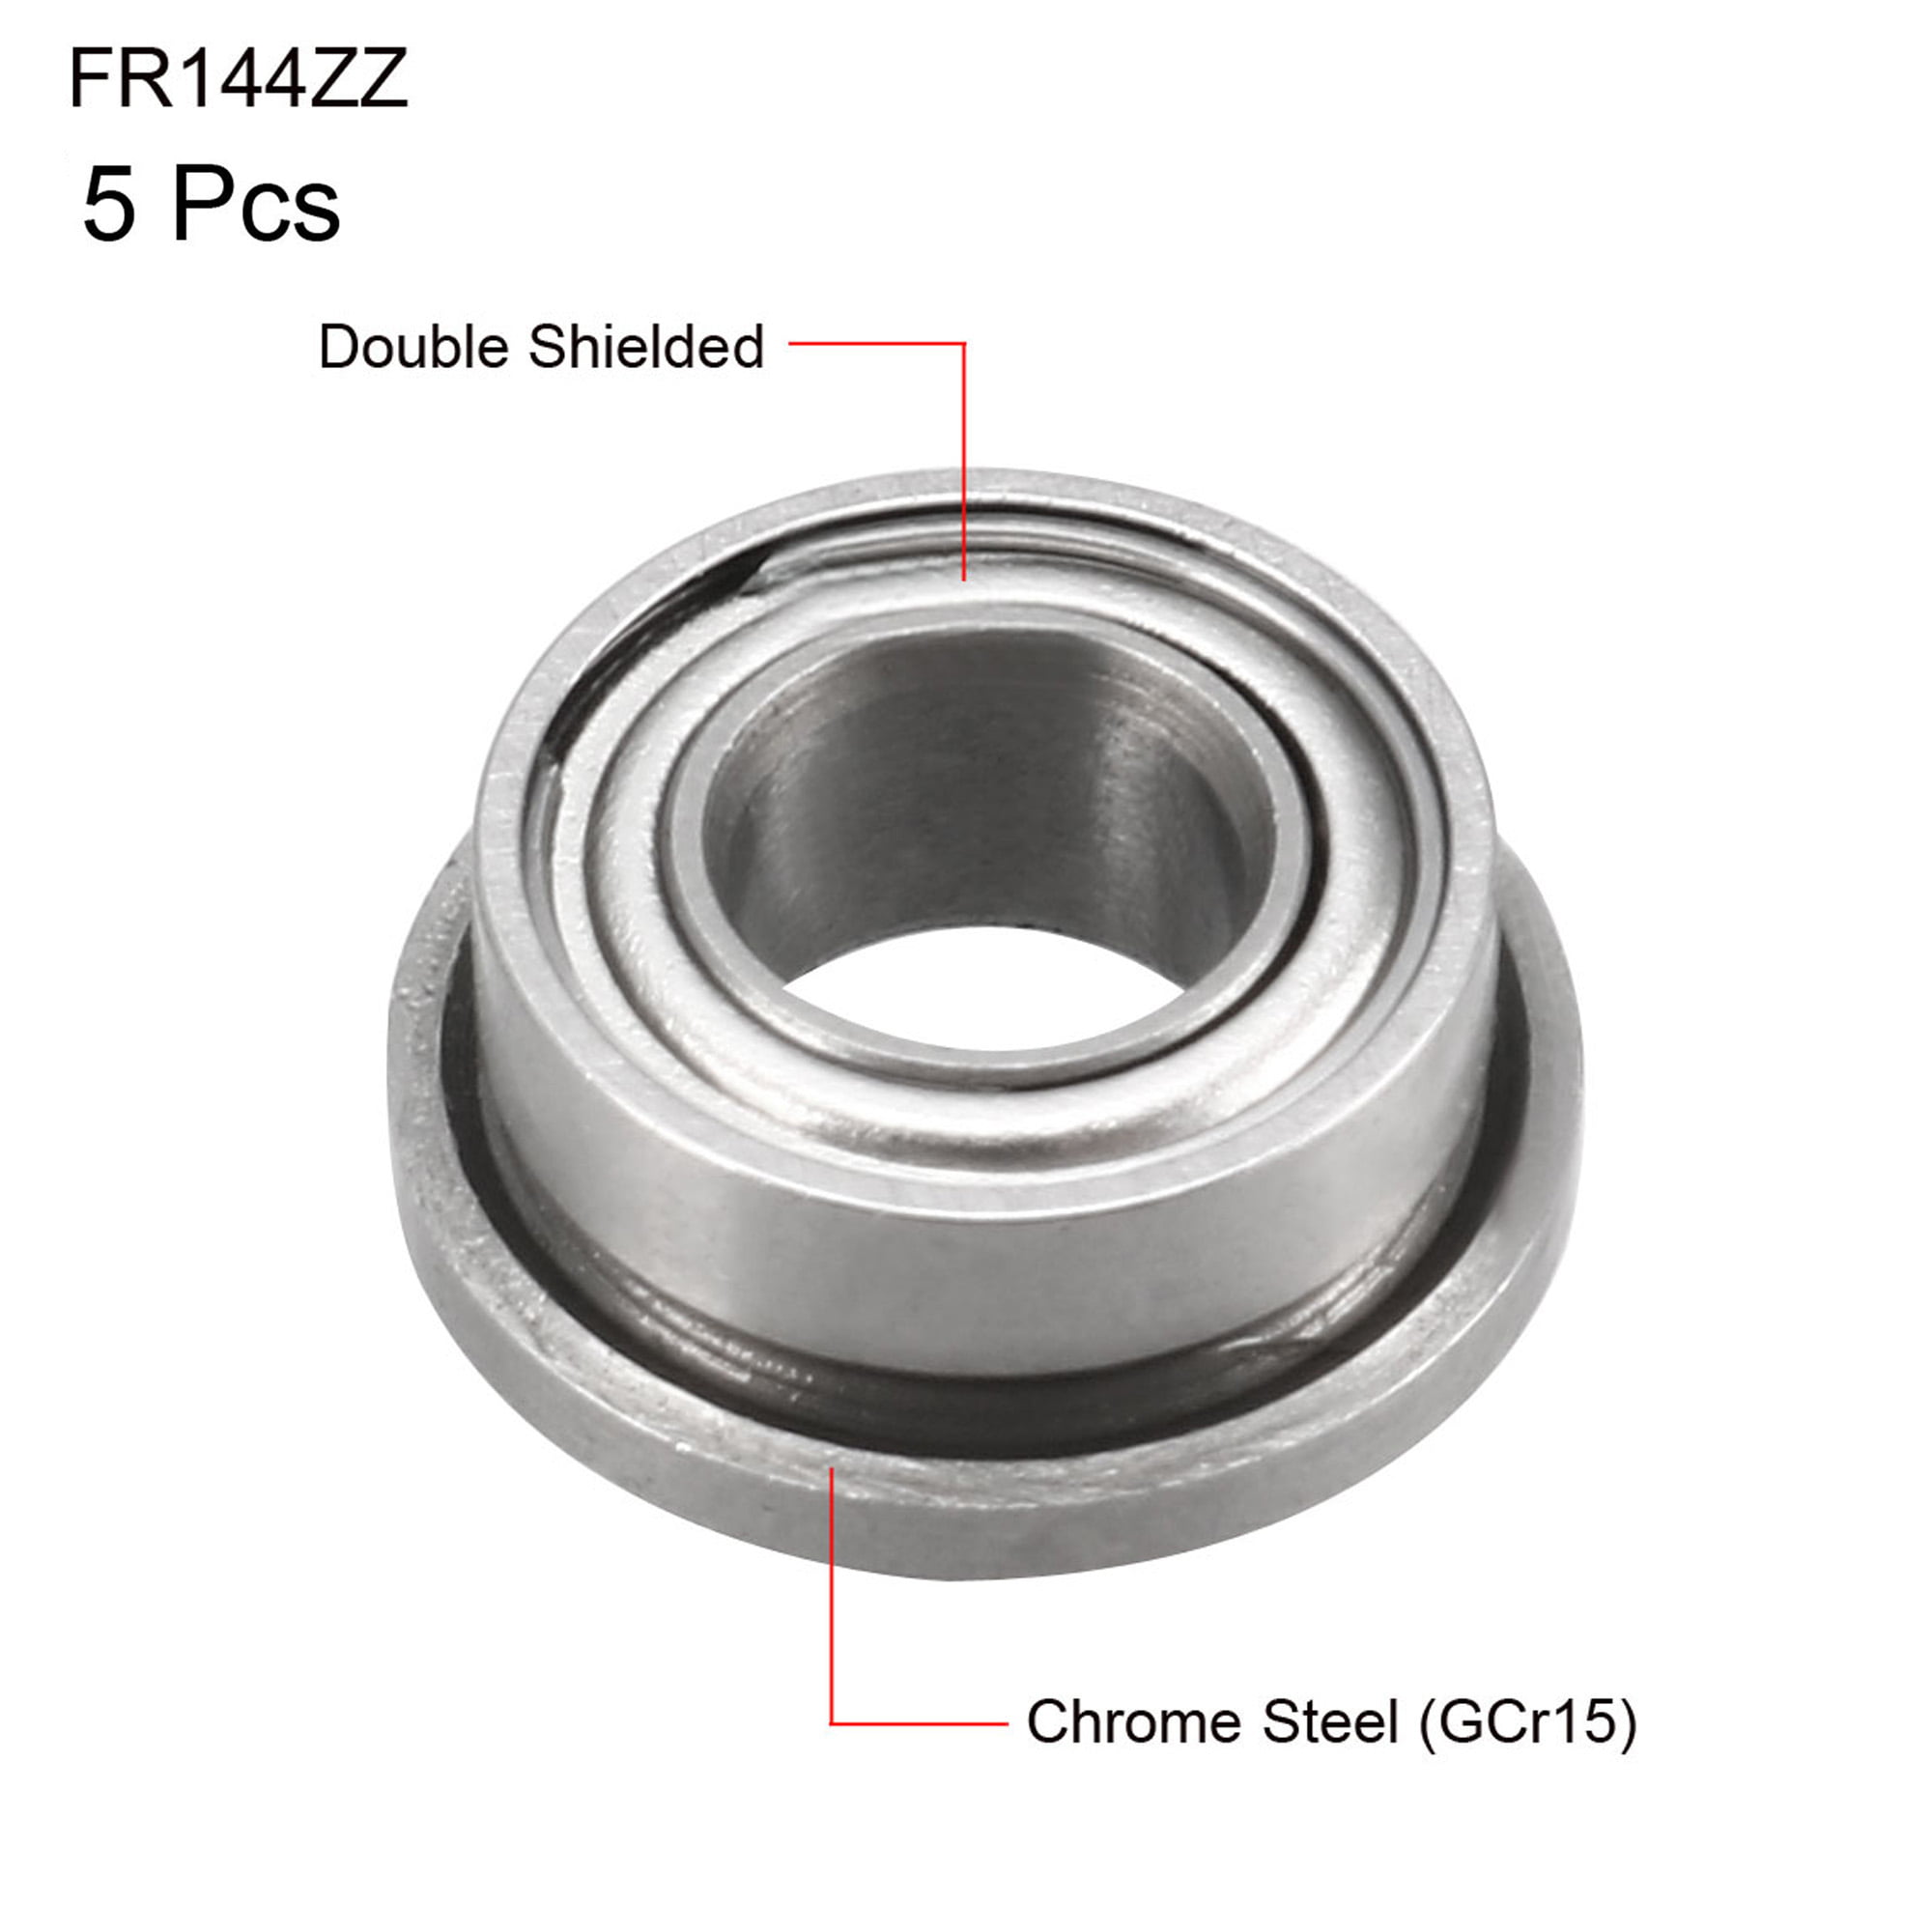 1/8" x 1/4" x 7/64" FR144zz Metal Shielded FLANGED Ball Bearings 25 PCS